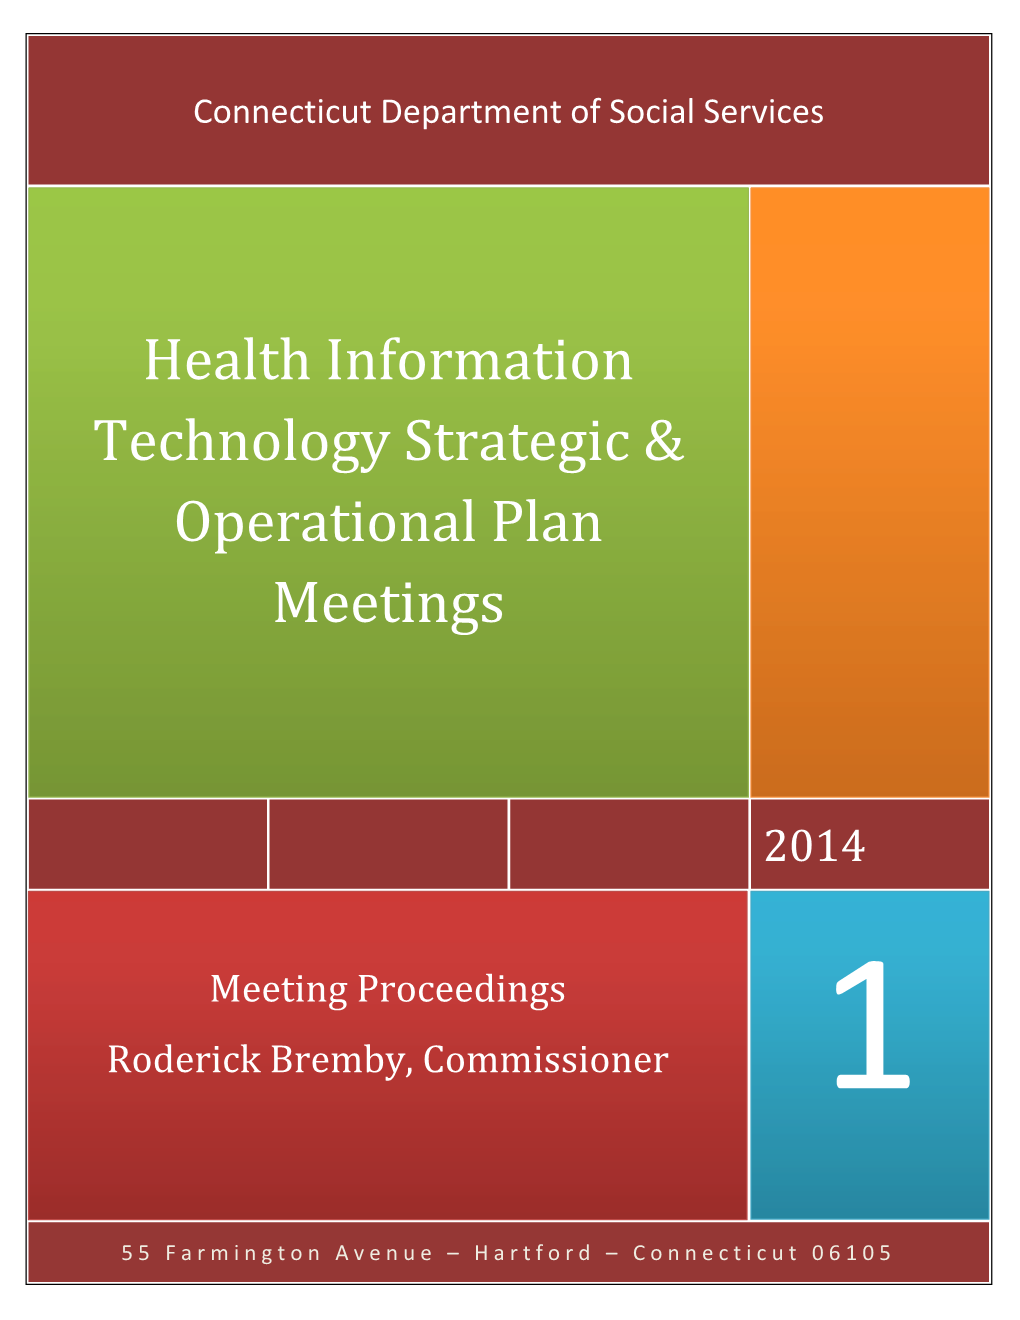 Health Information Technology Strategic & Operational Plan Meetings